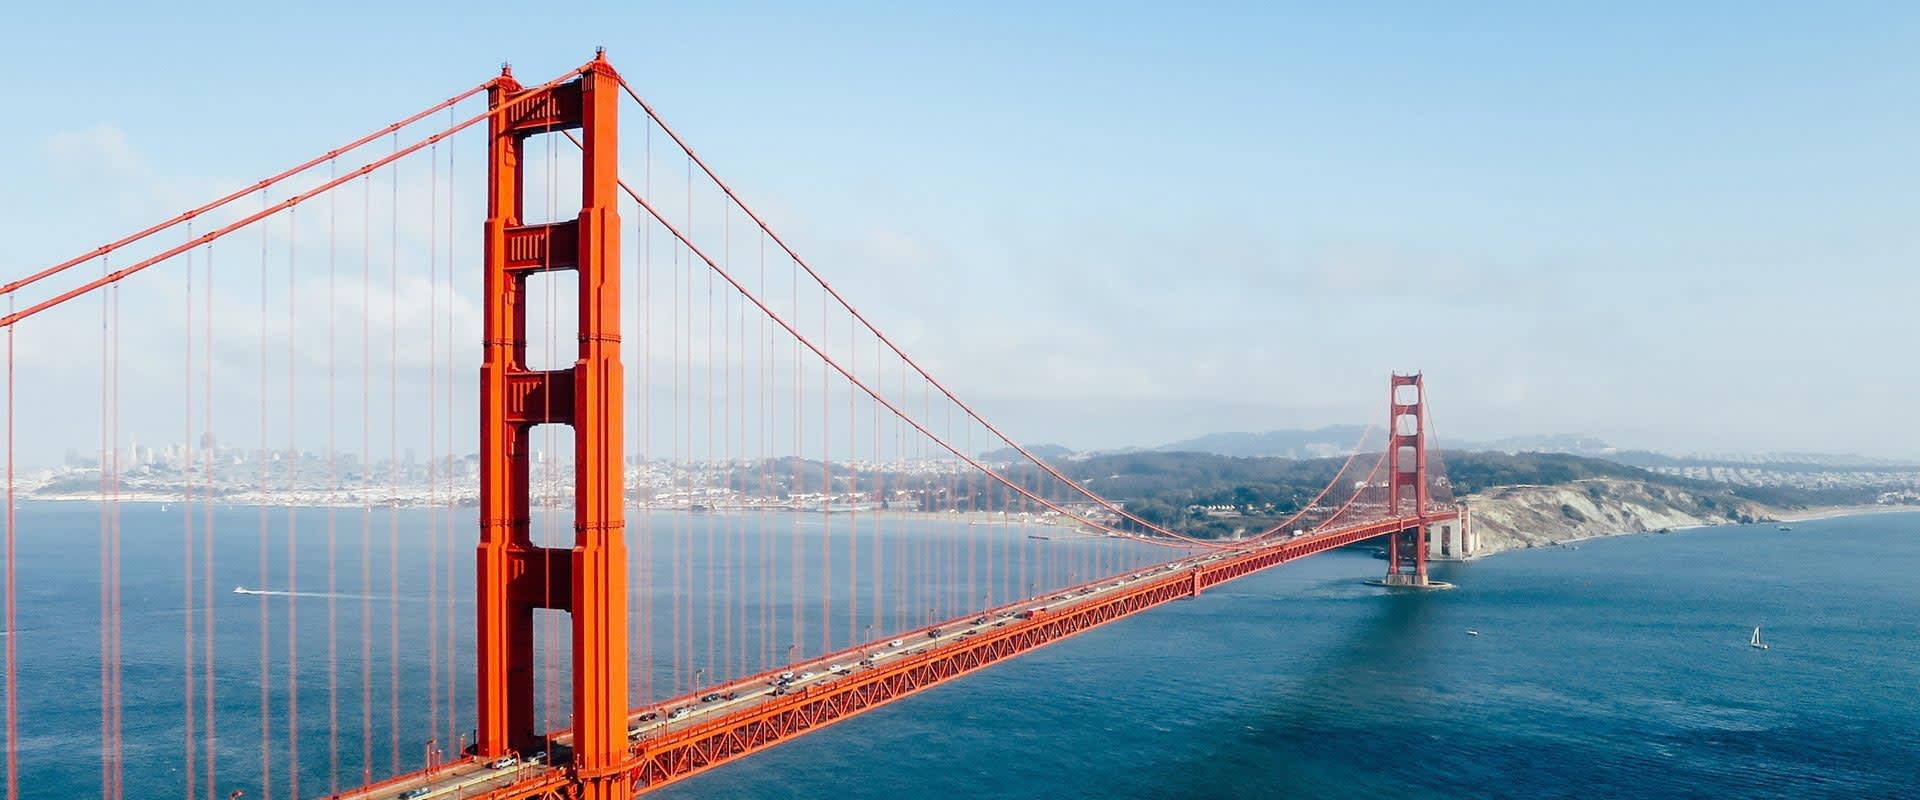 Golden Gate Bridge in Northern California